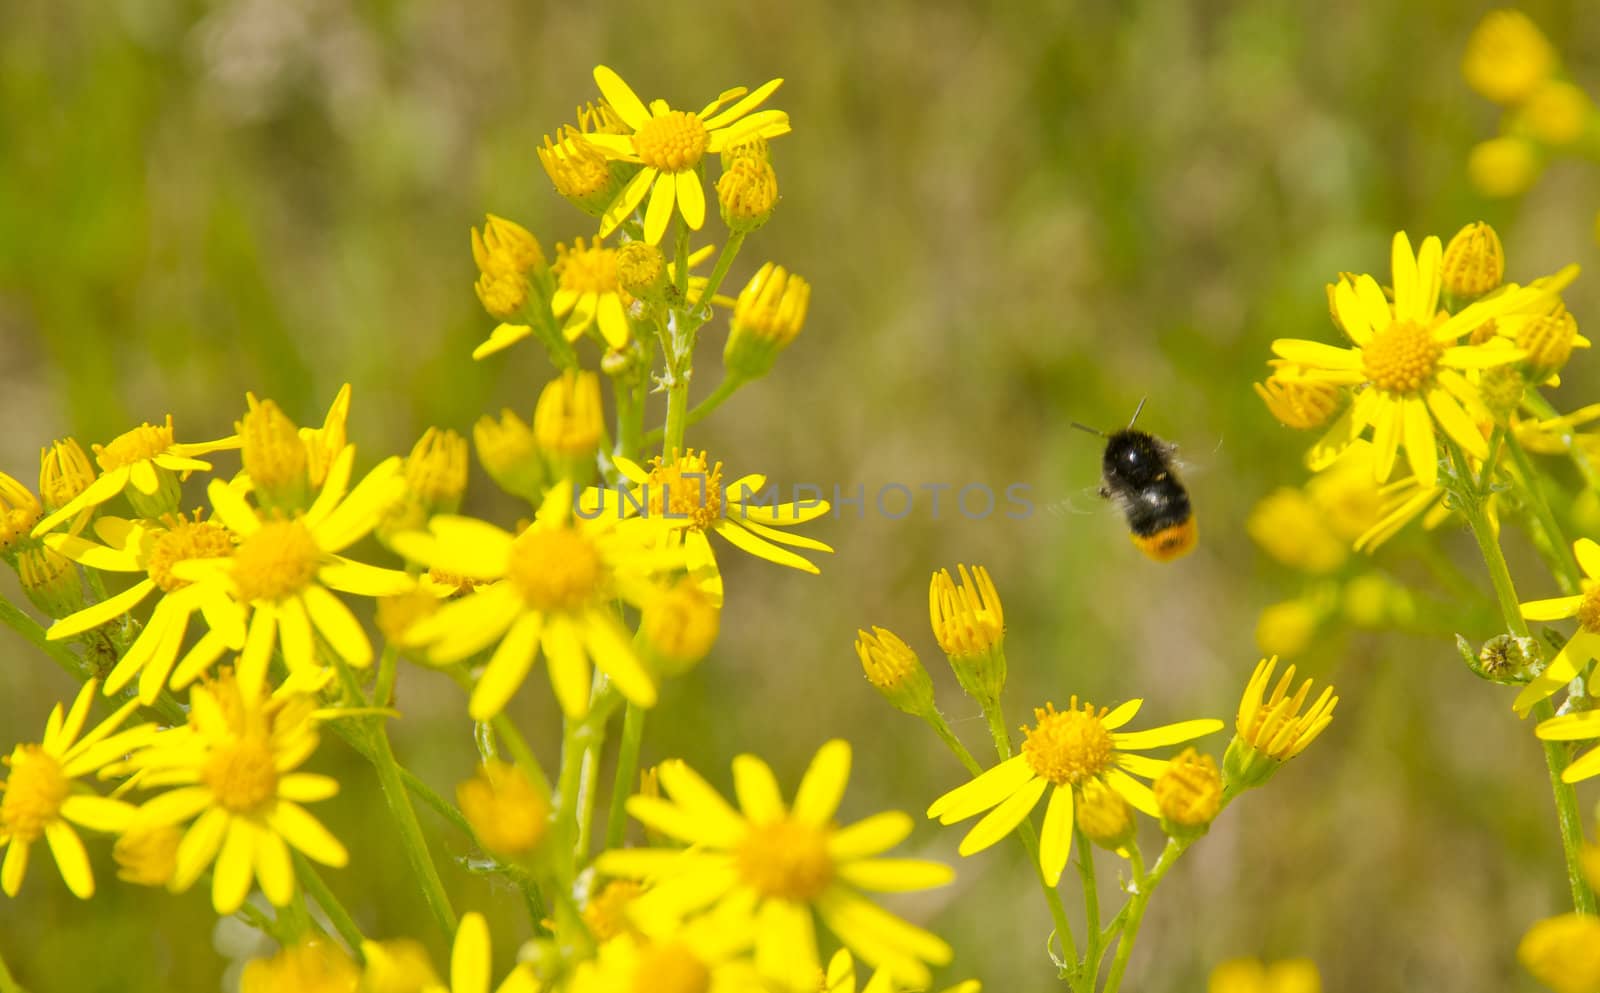 summery meadow with flowers and bumblebee by Darius.Dzinnik